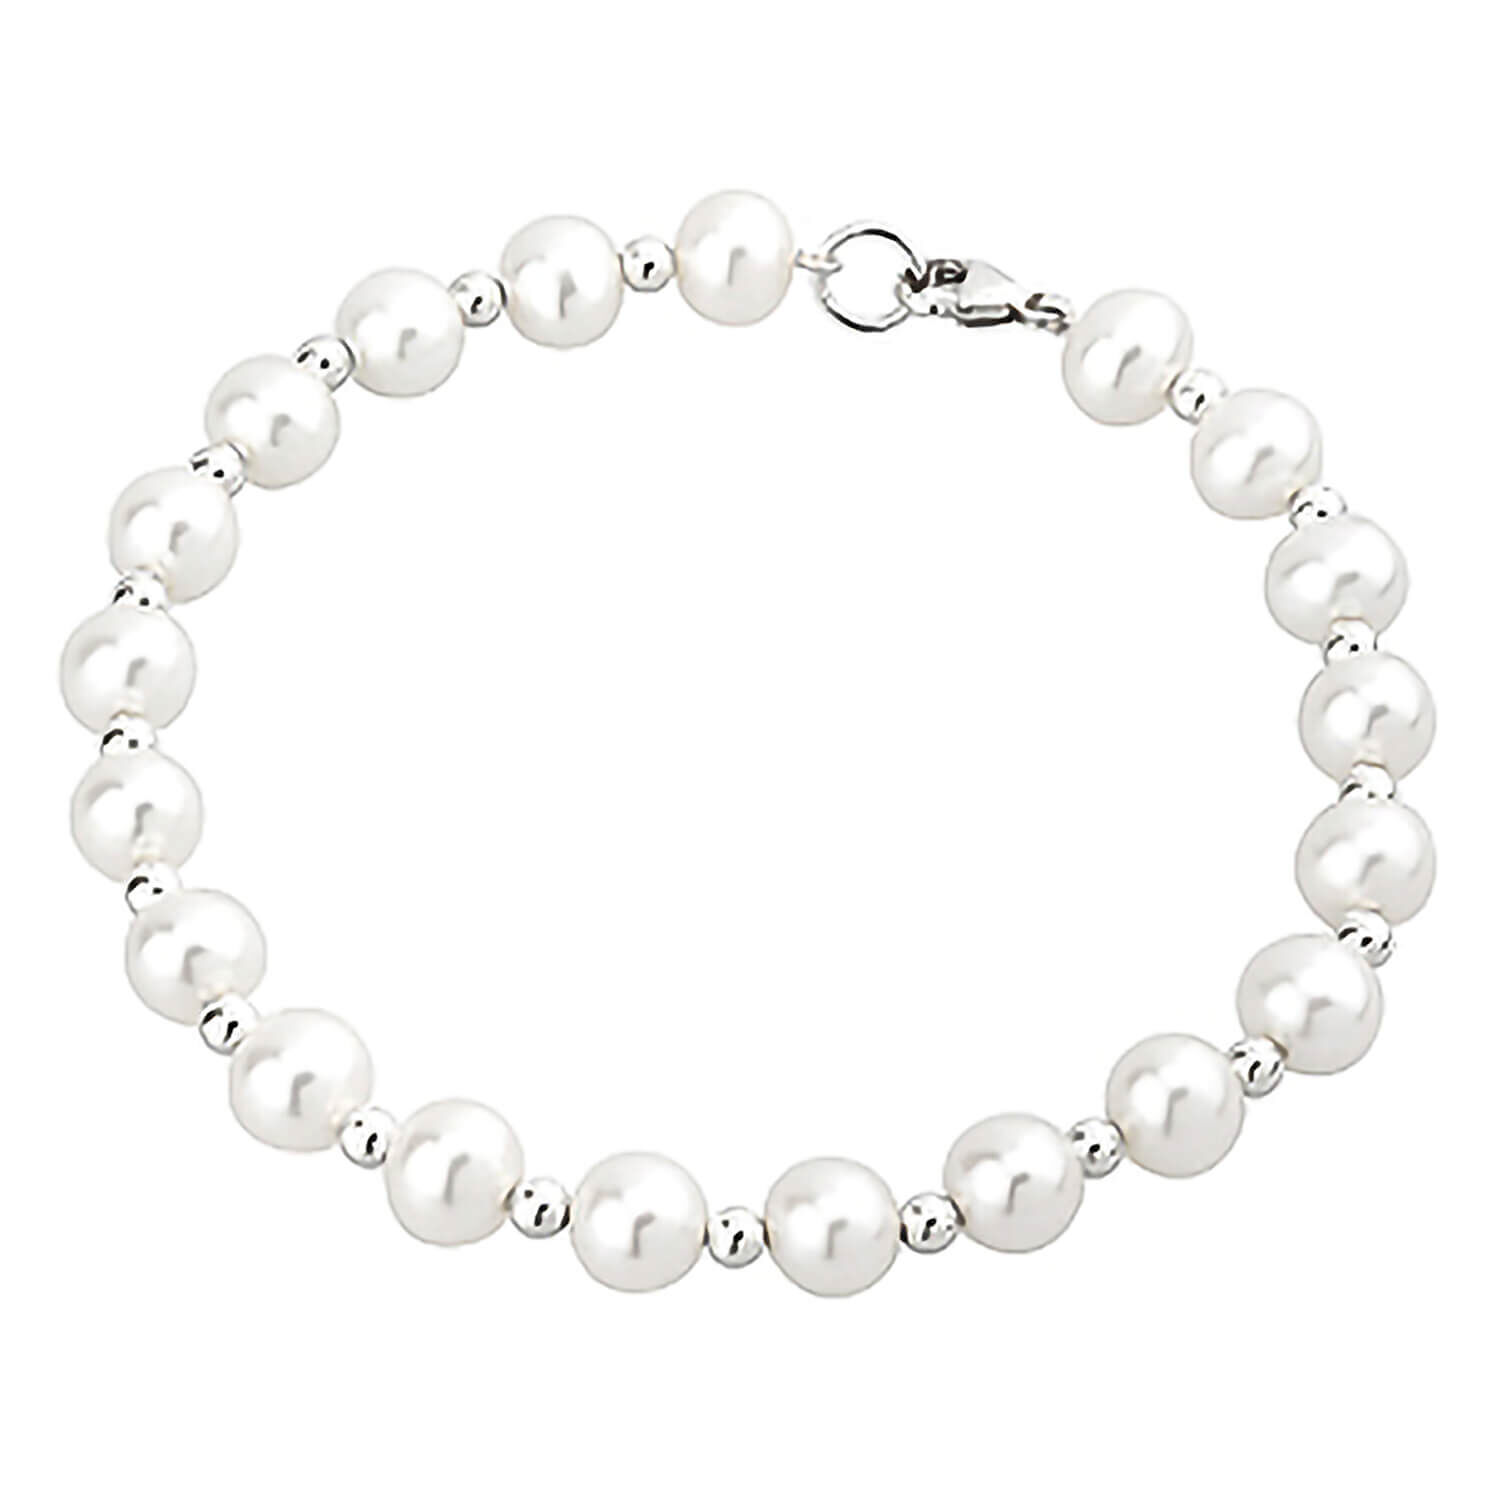 Share more than 77 white pearl bracelet uk latest